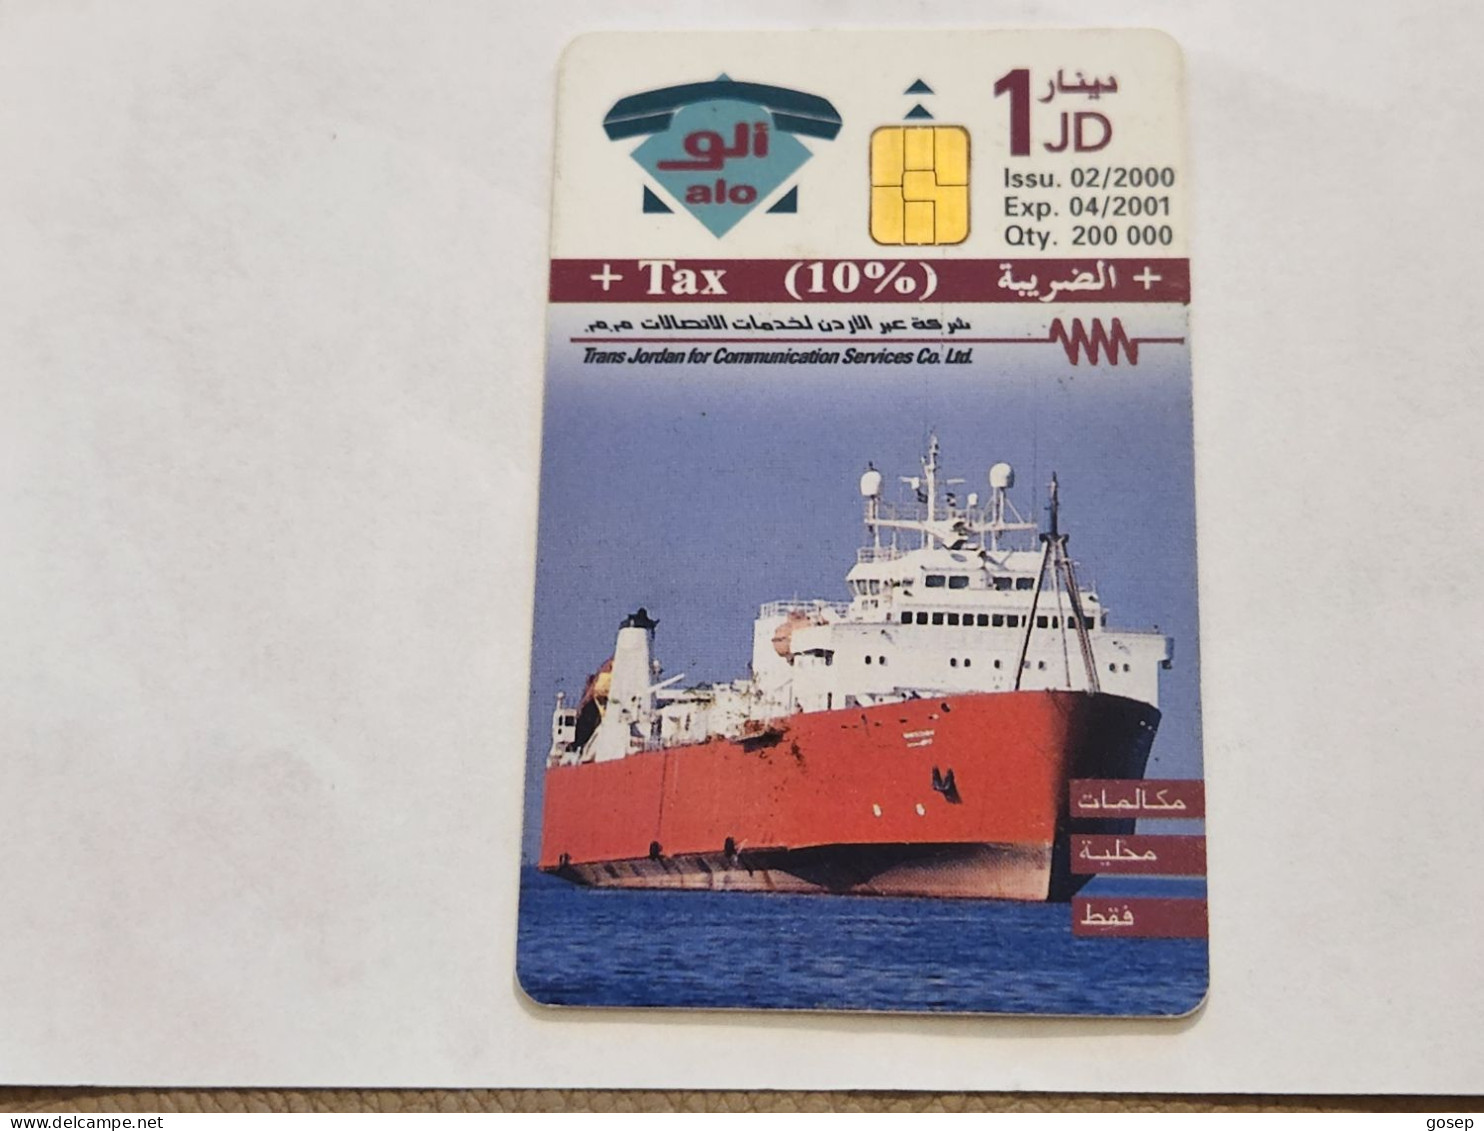 JORDAN-(JO-ALO-0075)-Aqaba Boats-(196)-(1001-568468)-(1JD)-(04/2001)-used Card+1card Prepiad Free - Jordania